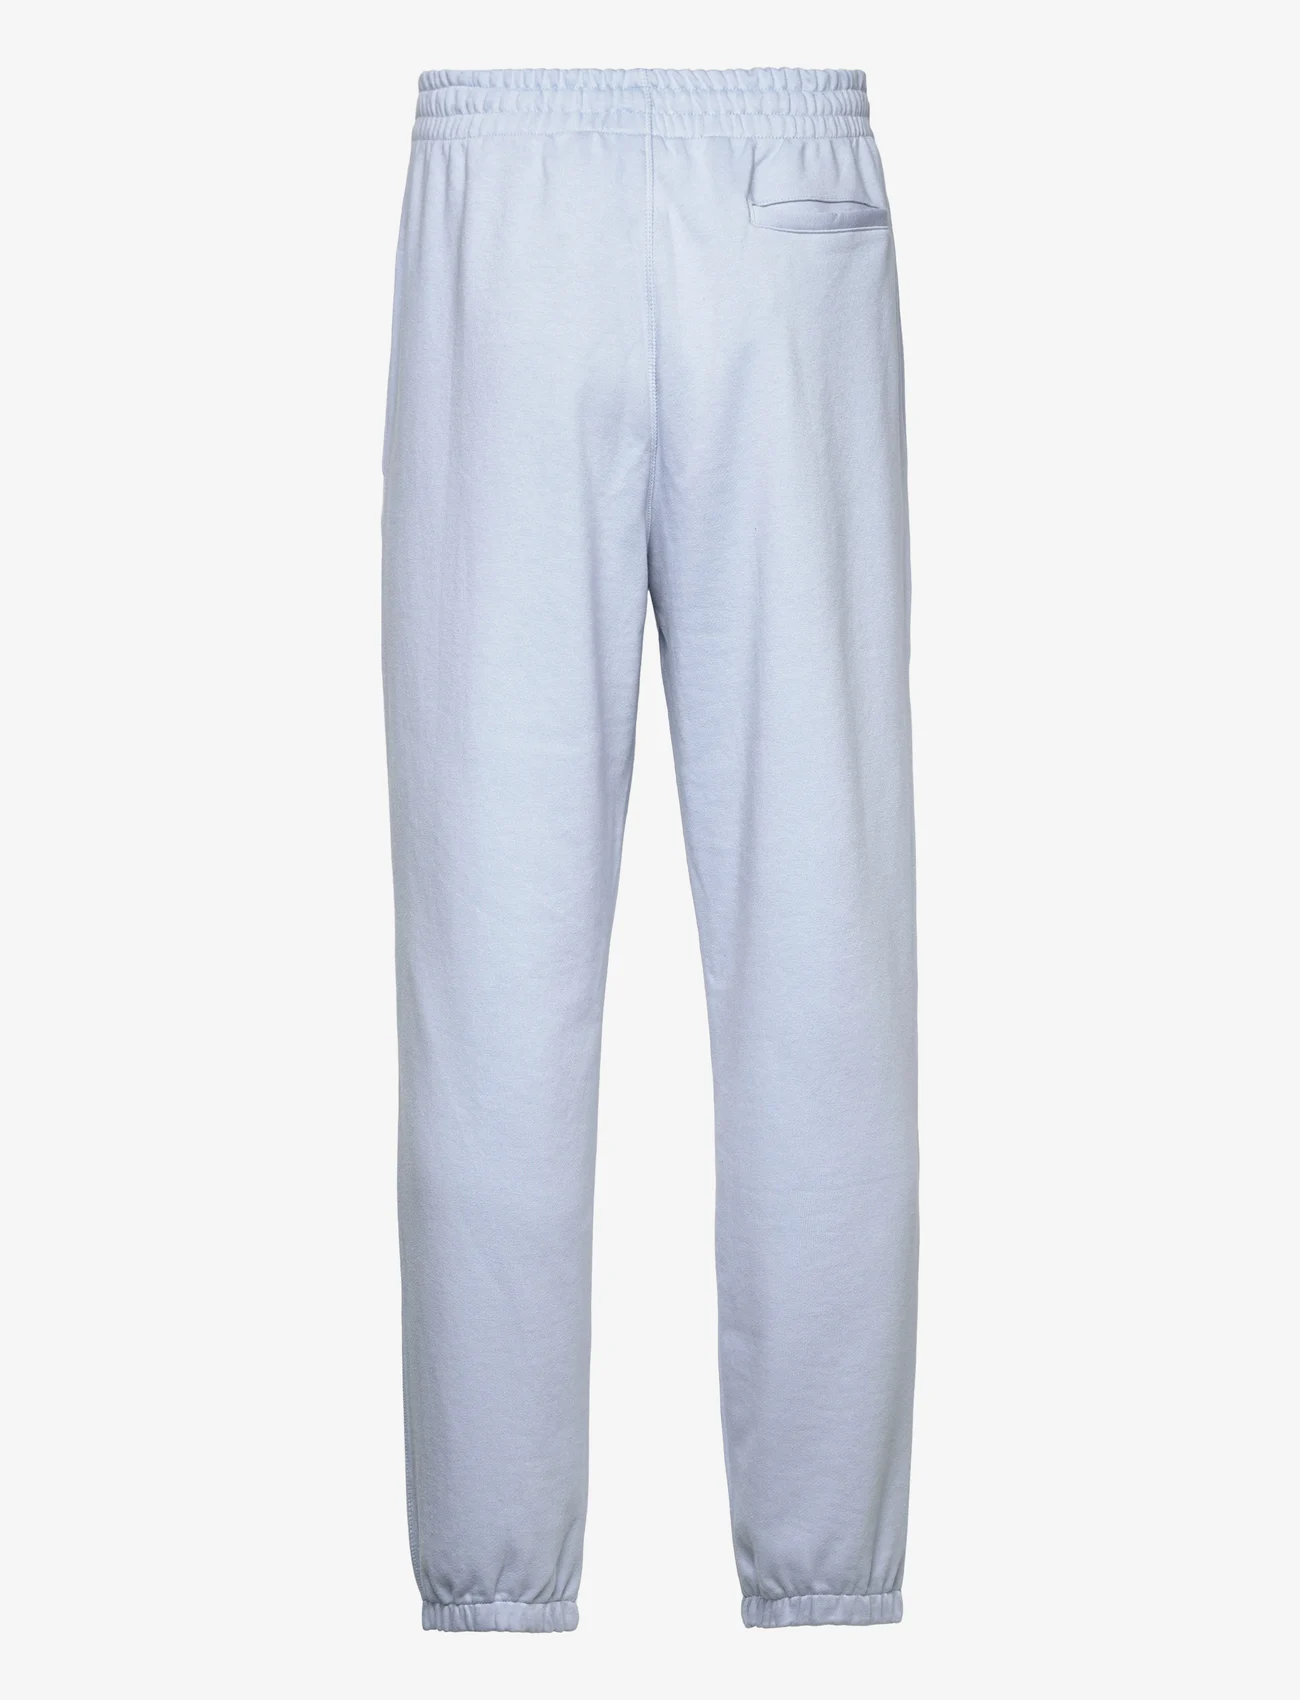 New Balance - Uni-ssentials French Terry Sweatpant - pants - light arctic grey - 1